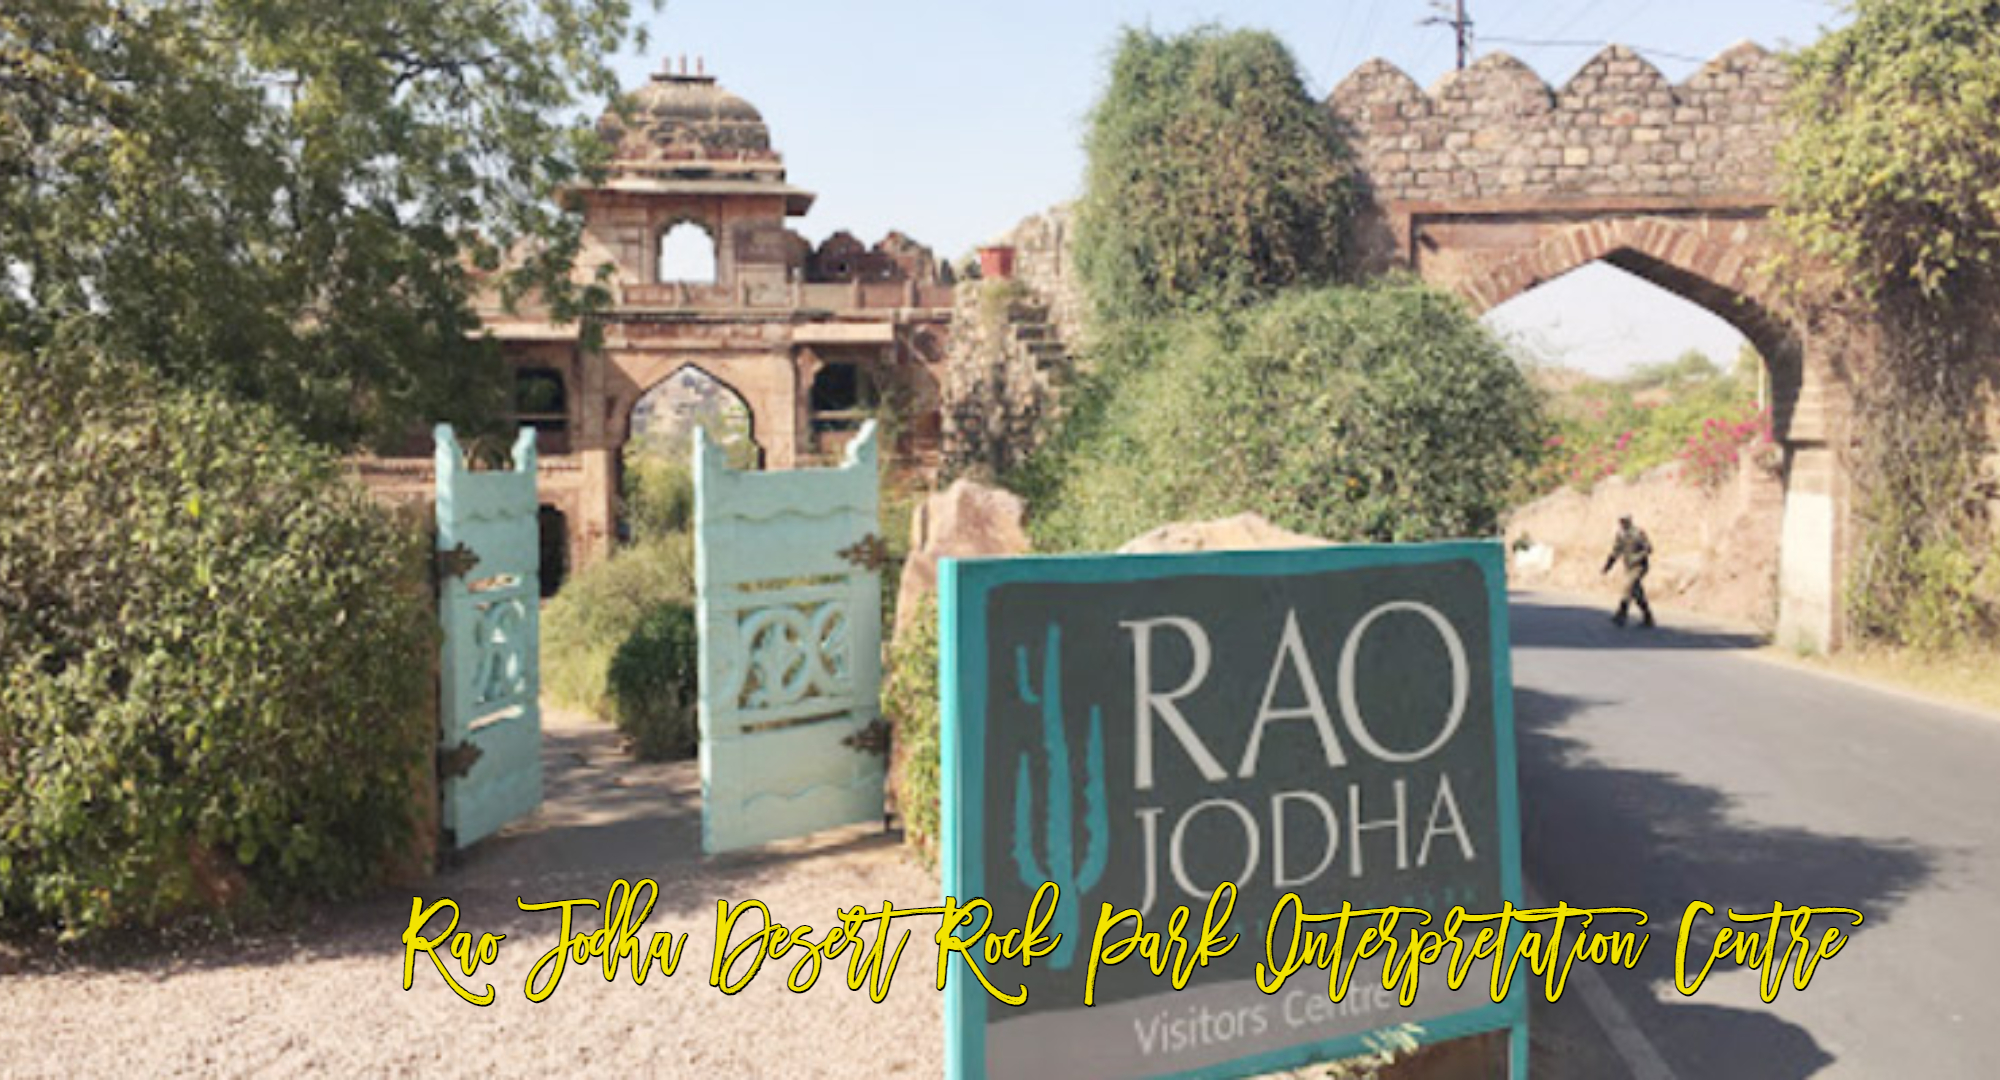 rao jodha desert rock park interpretation centre, jodhpur museum, best museum in jodhpur,